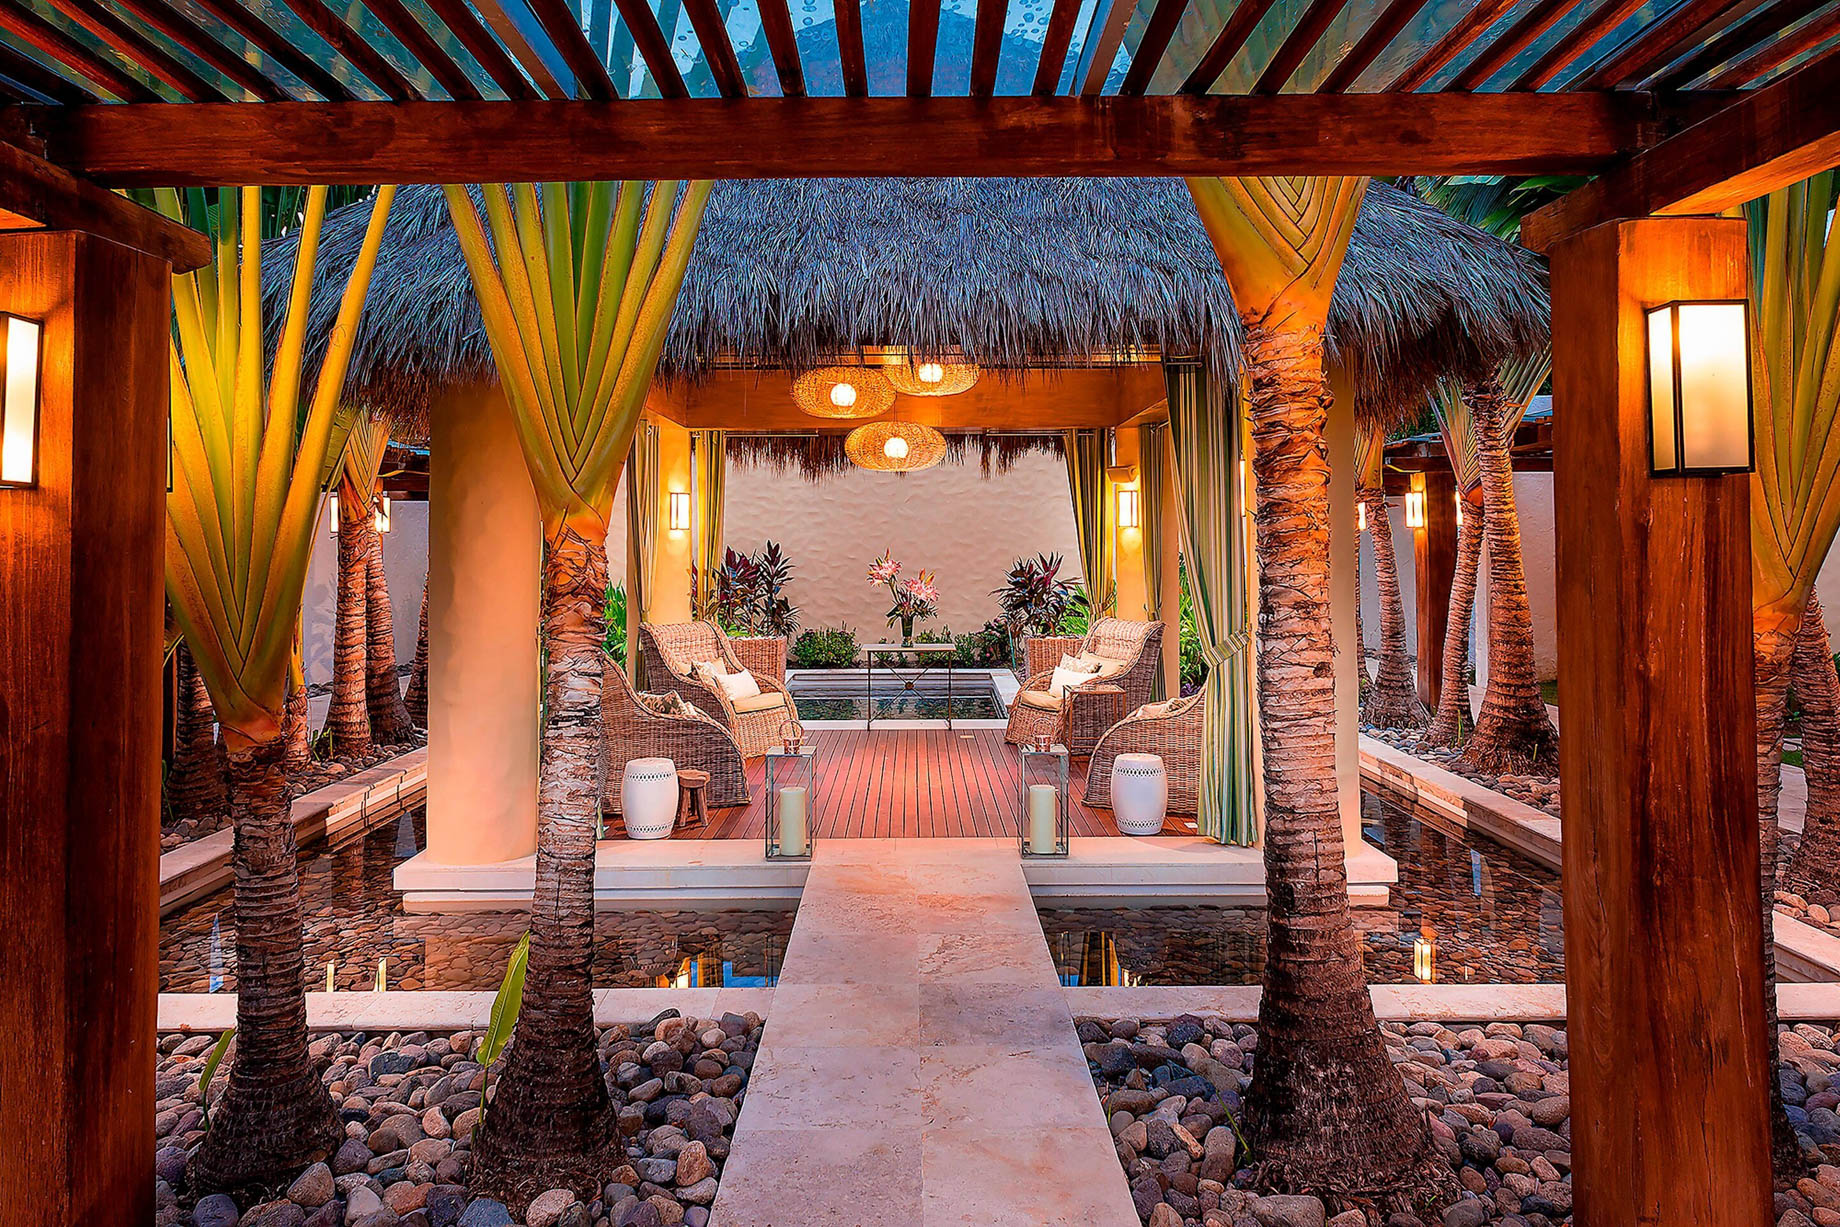 The St. Regis Punta Mita Resort – Nayarit, Mexico – Remède Spa Relaxation Island